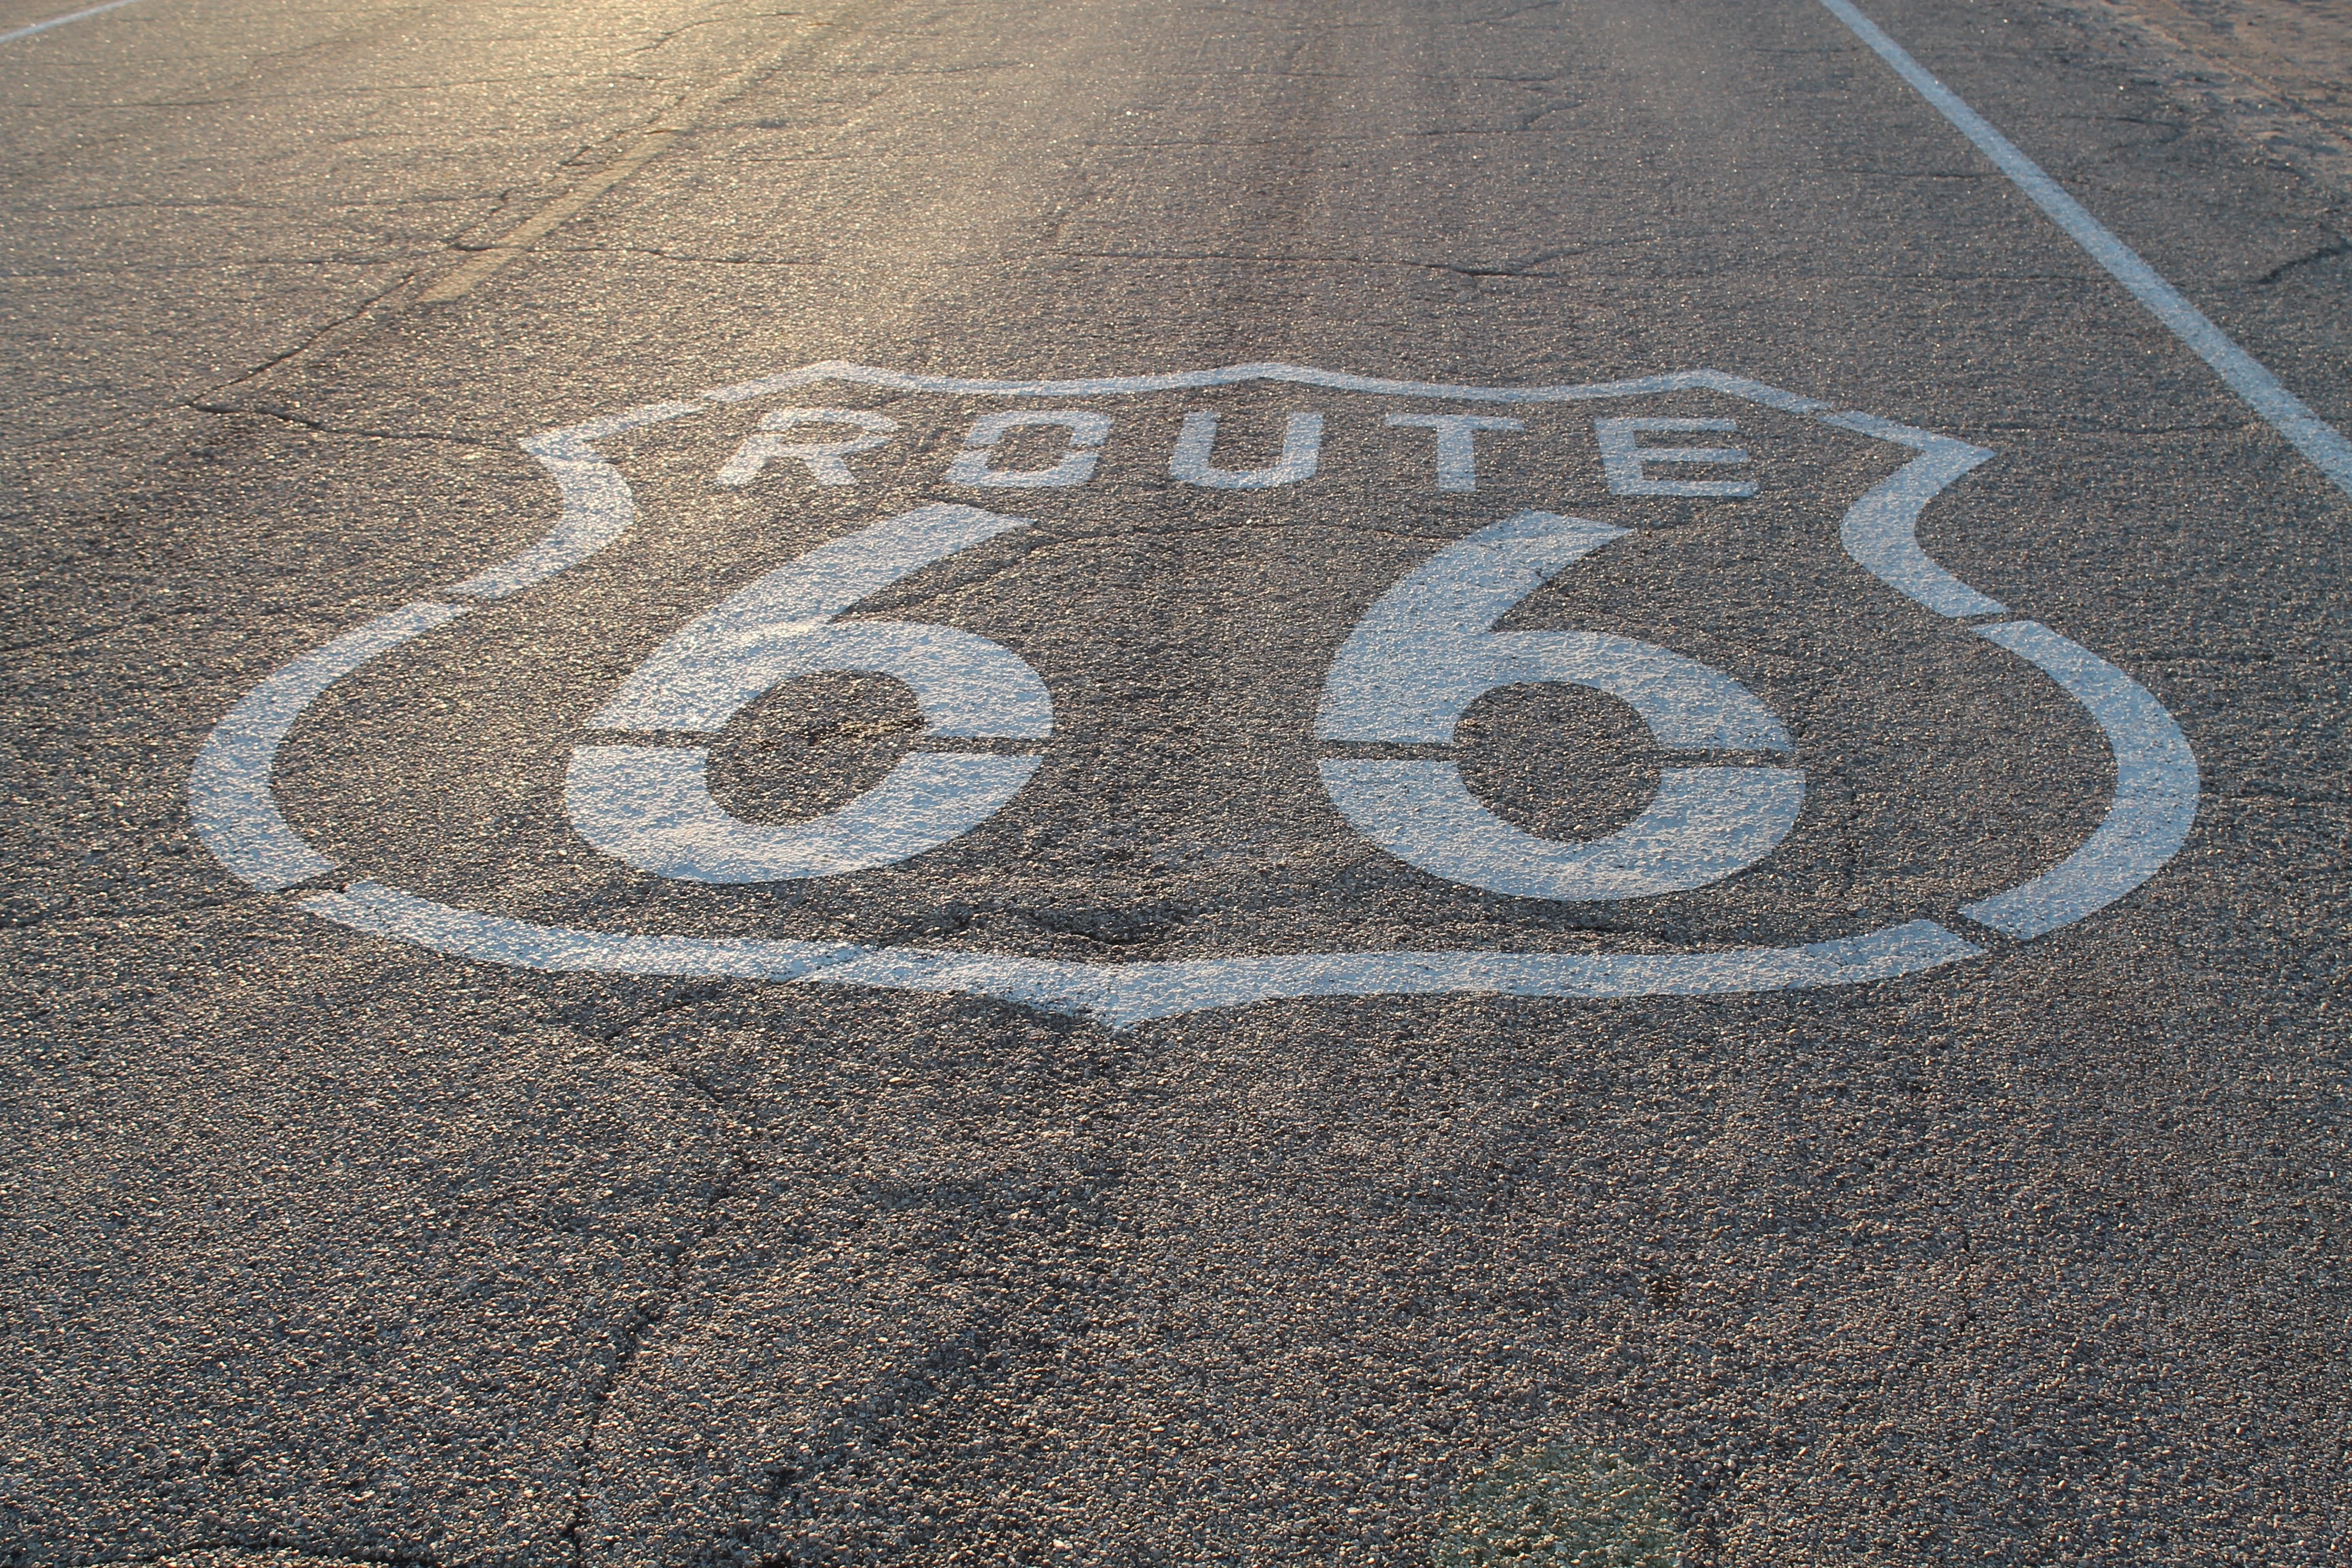 Route, Highway, Travel, Route 66, Desert, asphalt, no people